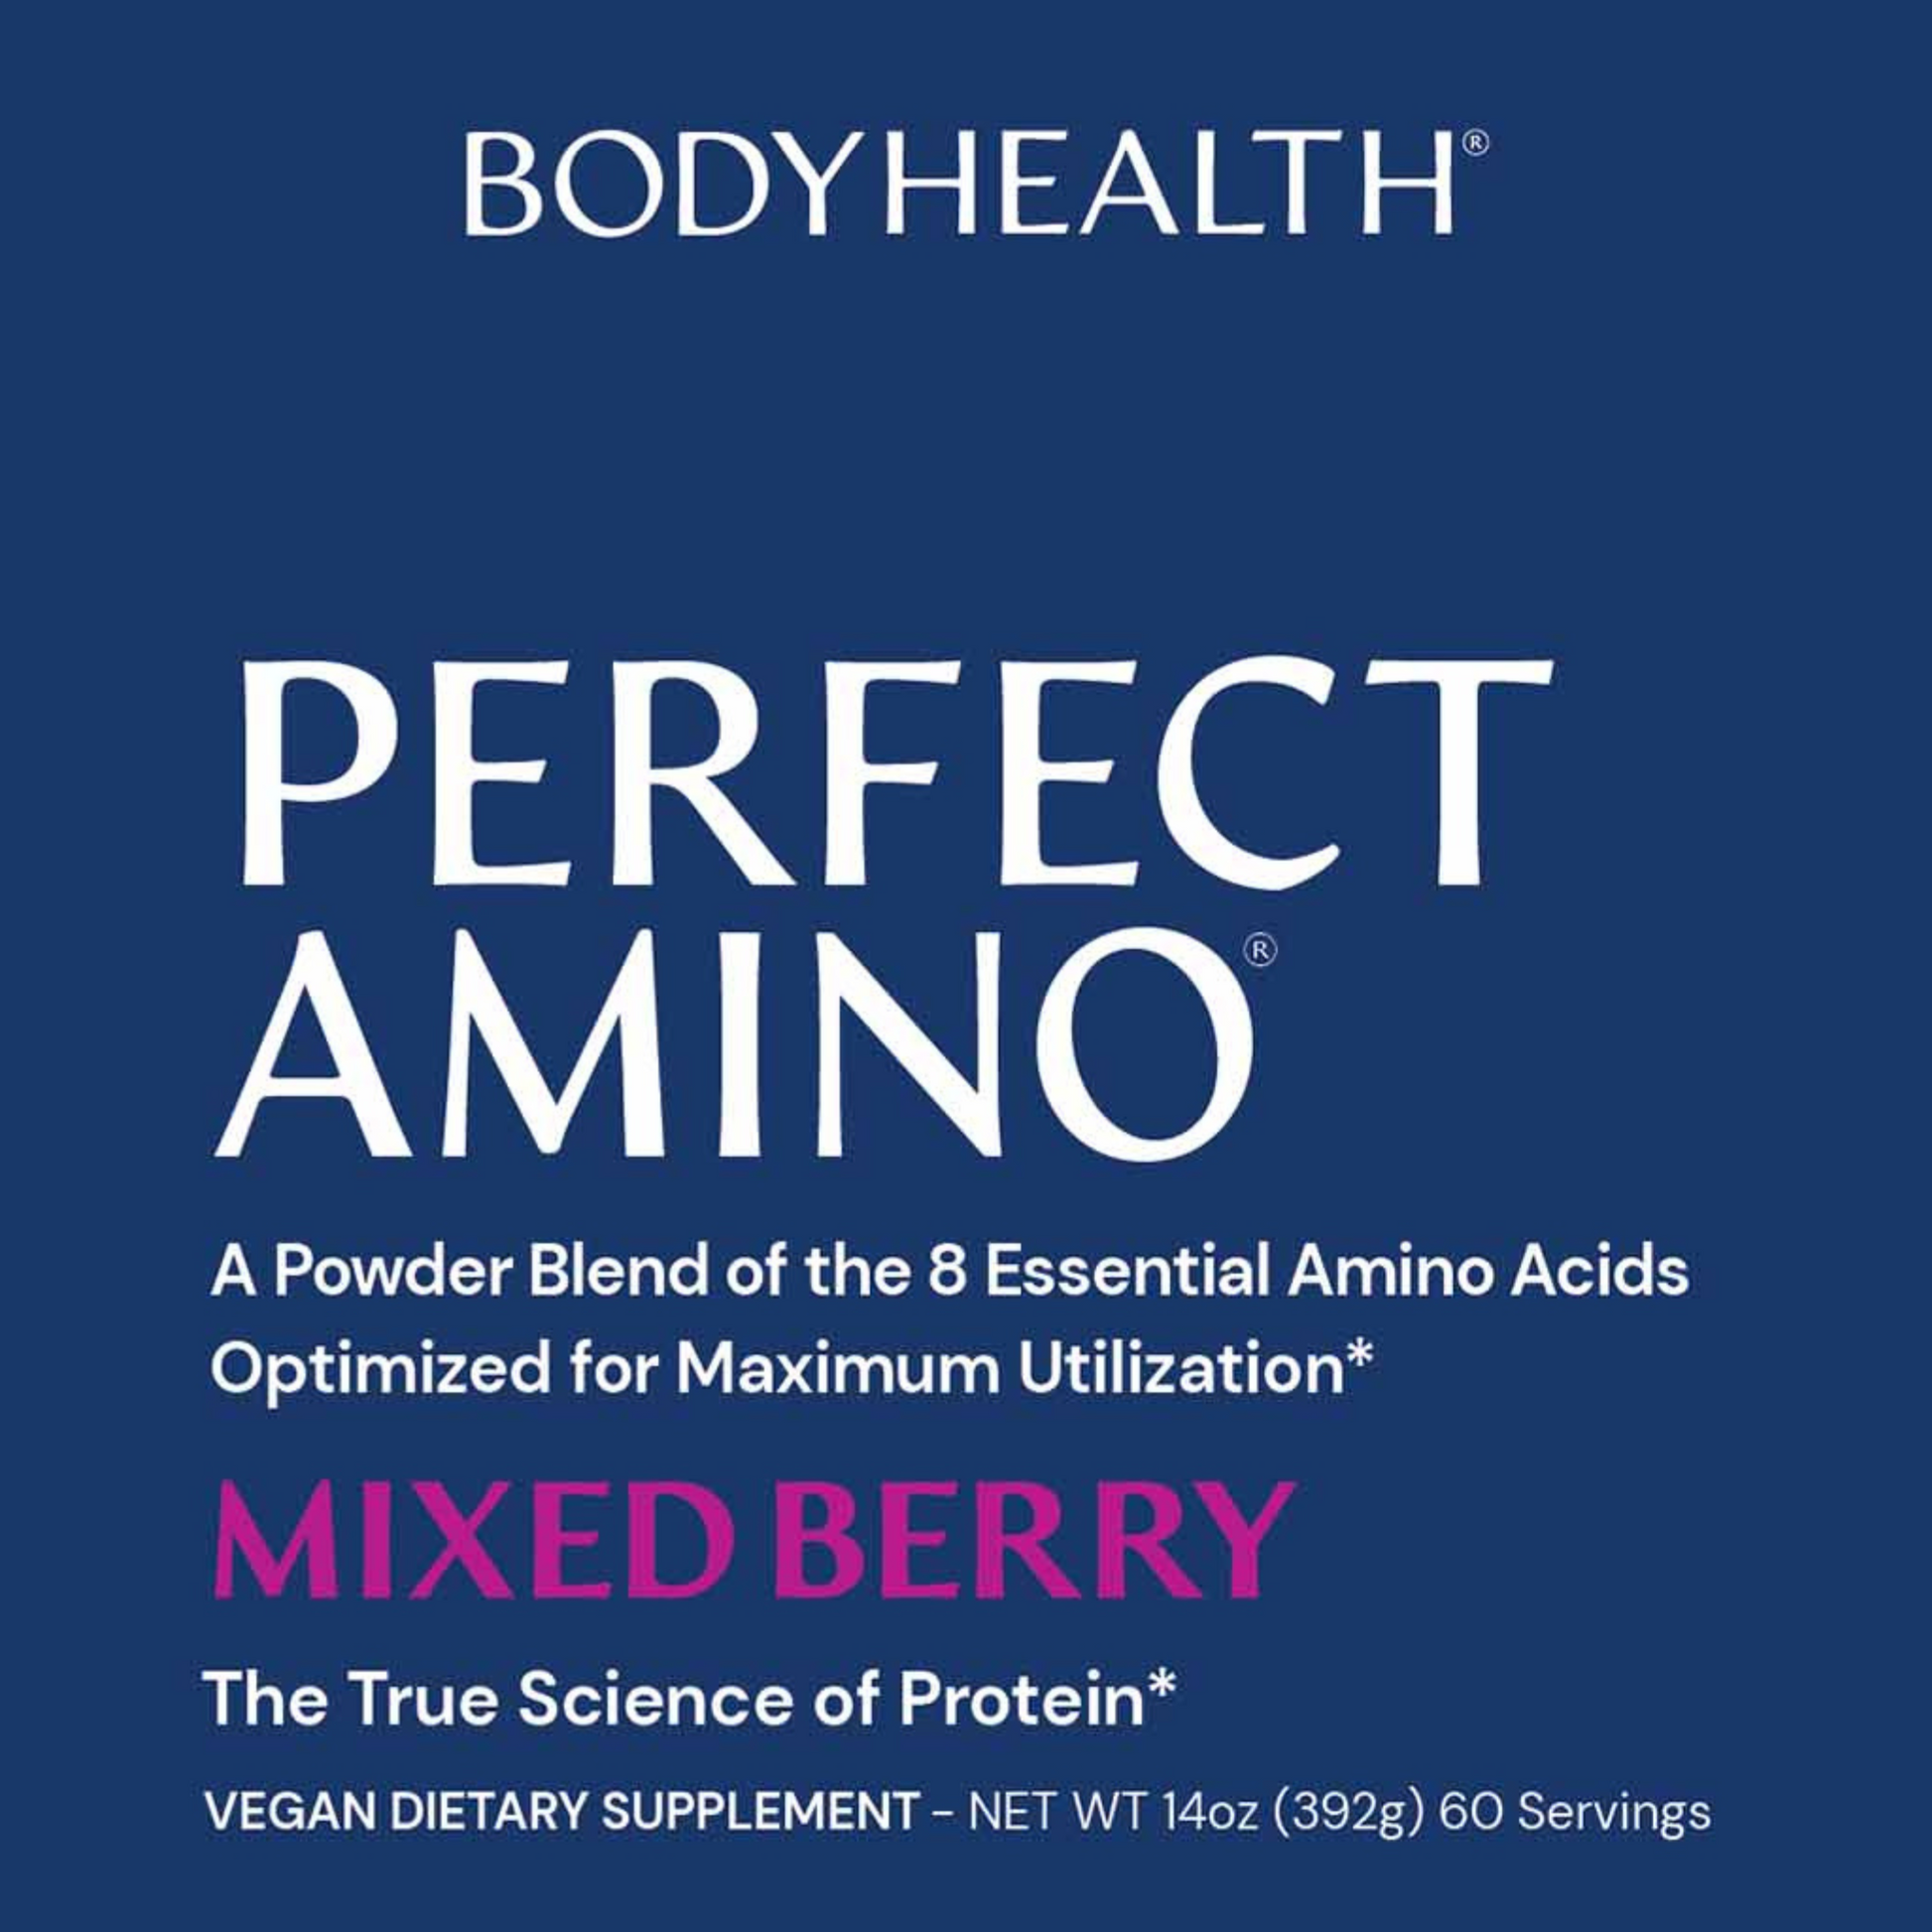 Perfect Amino by Body Health